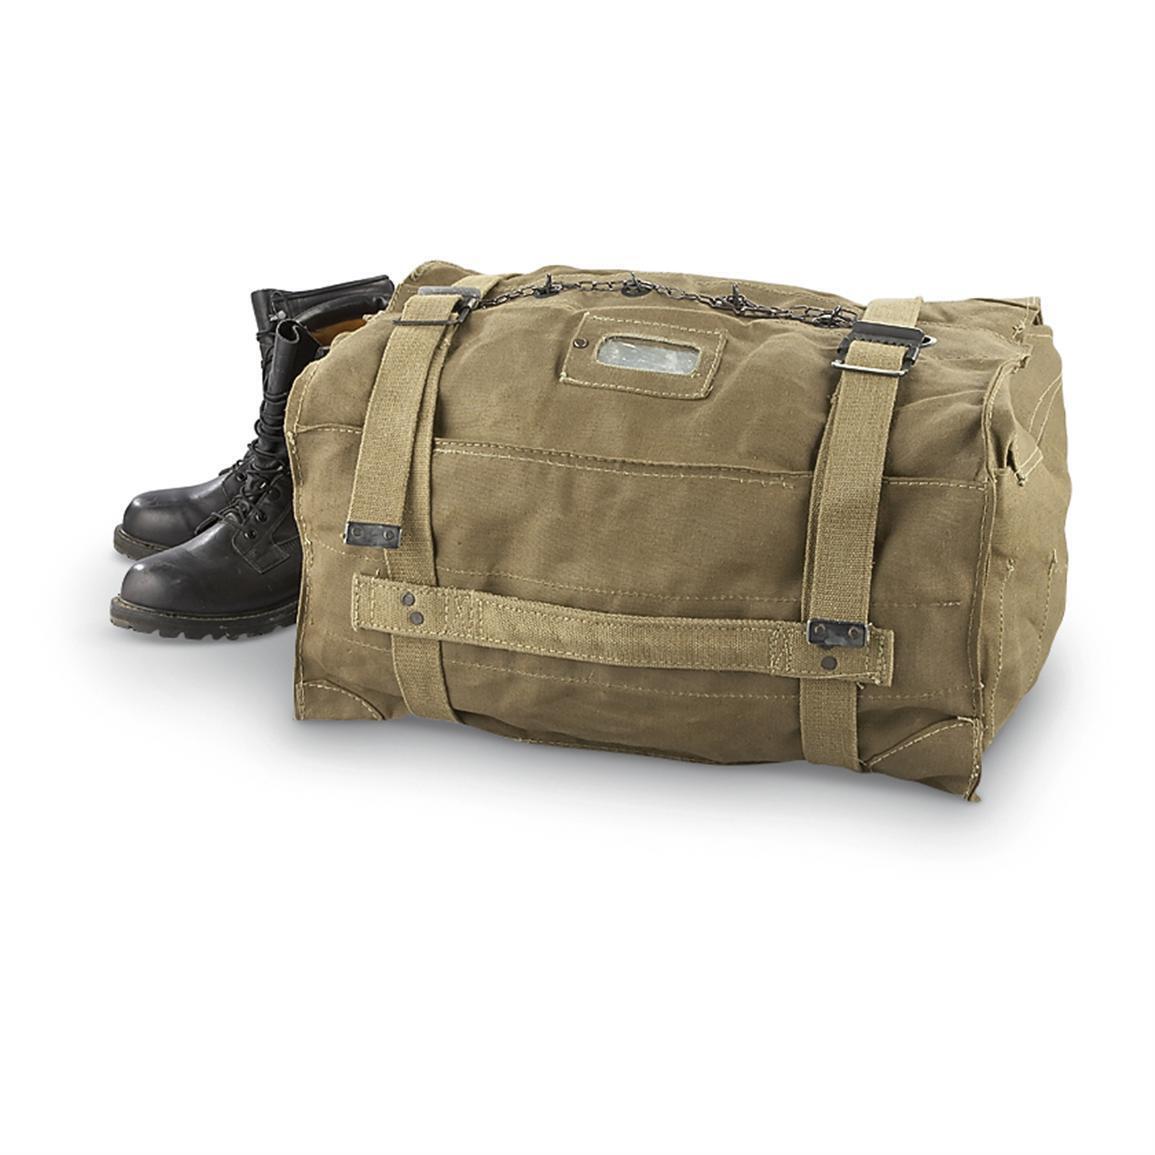 Used Italian Military Surplus Kit Bag Women Waterproof Organizer Traveling